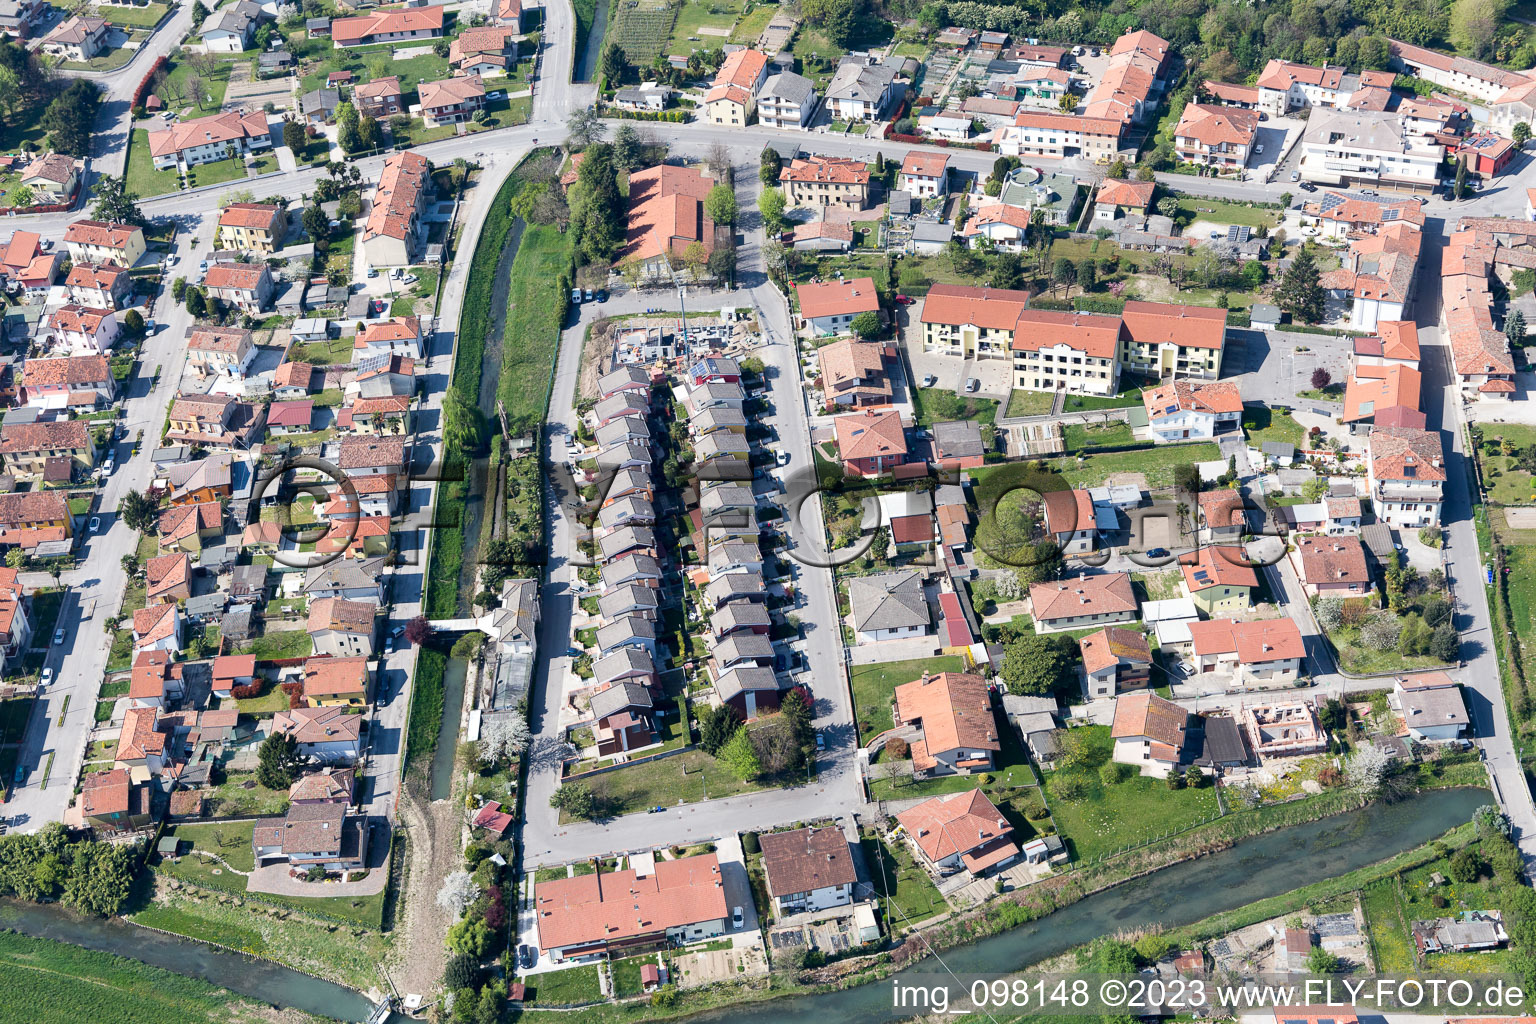 Aerial view of Fossalta di Portogruaro in the state Veneto, Italy